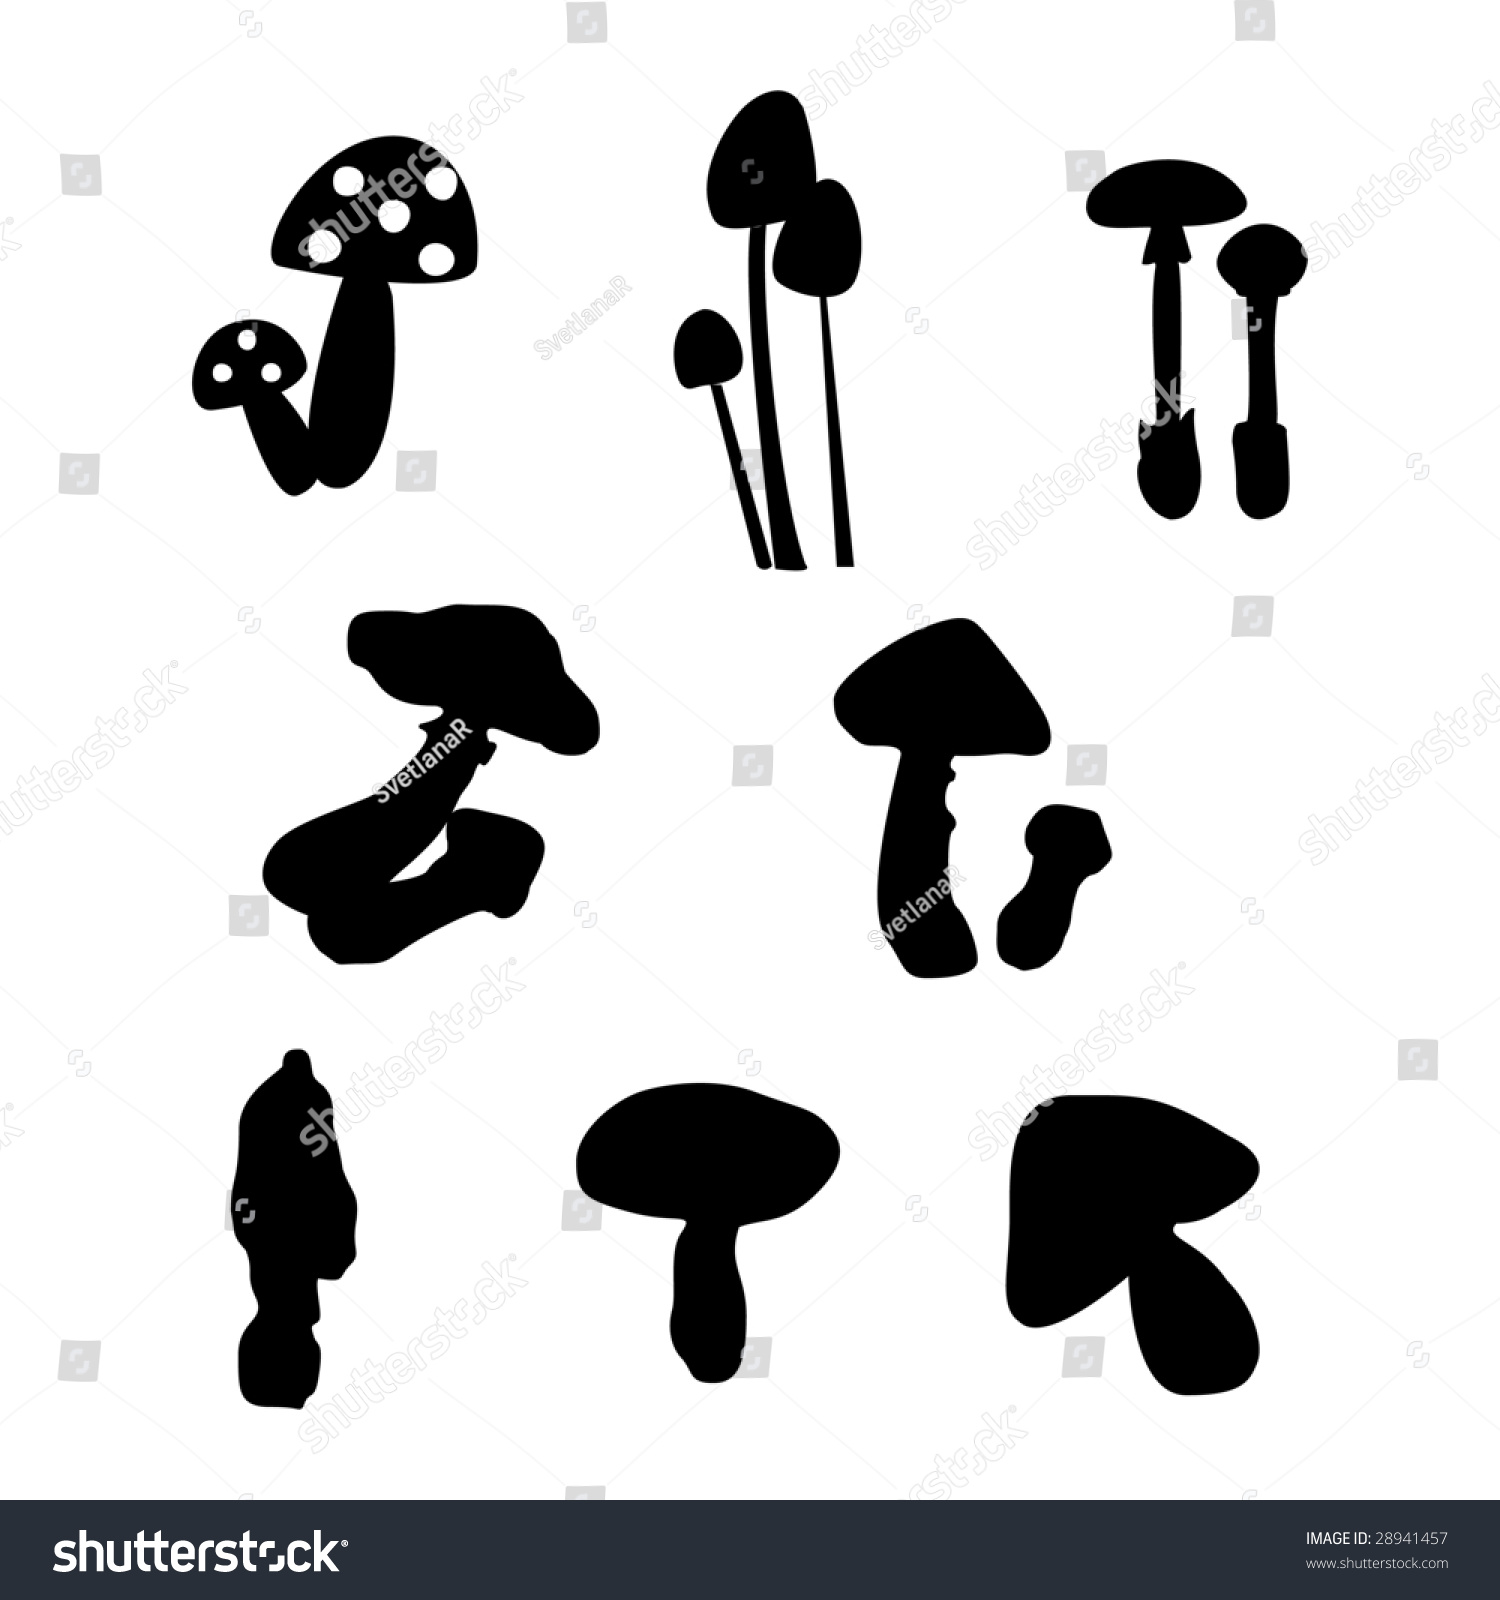 mushroom silhouette clip art - photo #25